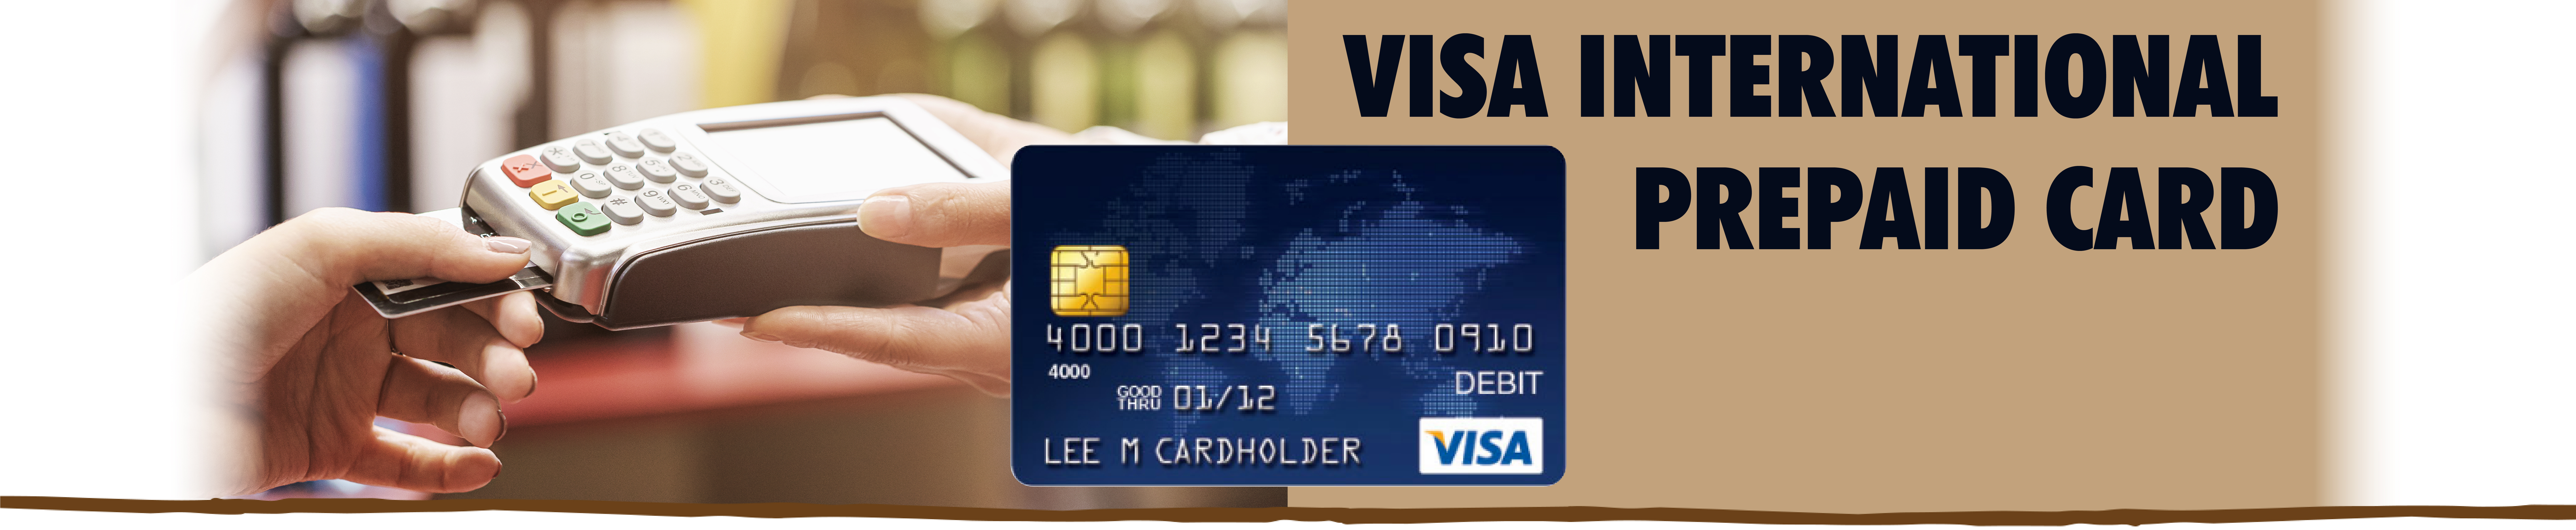 Visa International Prepaid Card